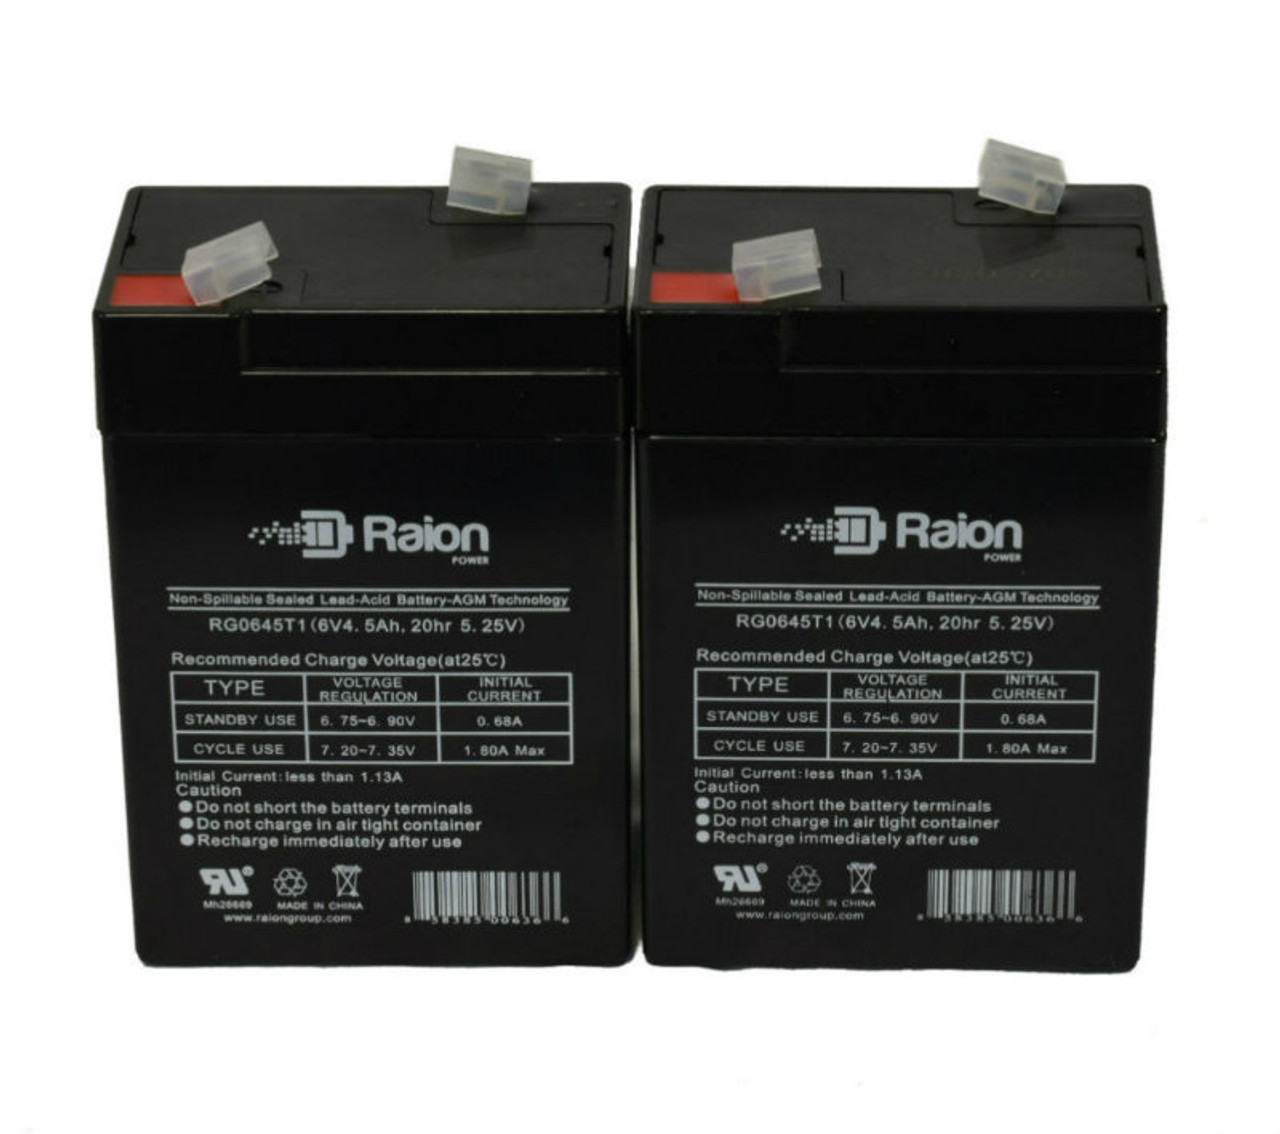 Raion Power 6V 4.5Ah Replacement Emergency Light Battery for Prescolite 12-255 - 2 Pack